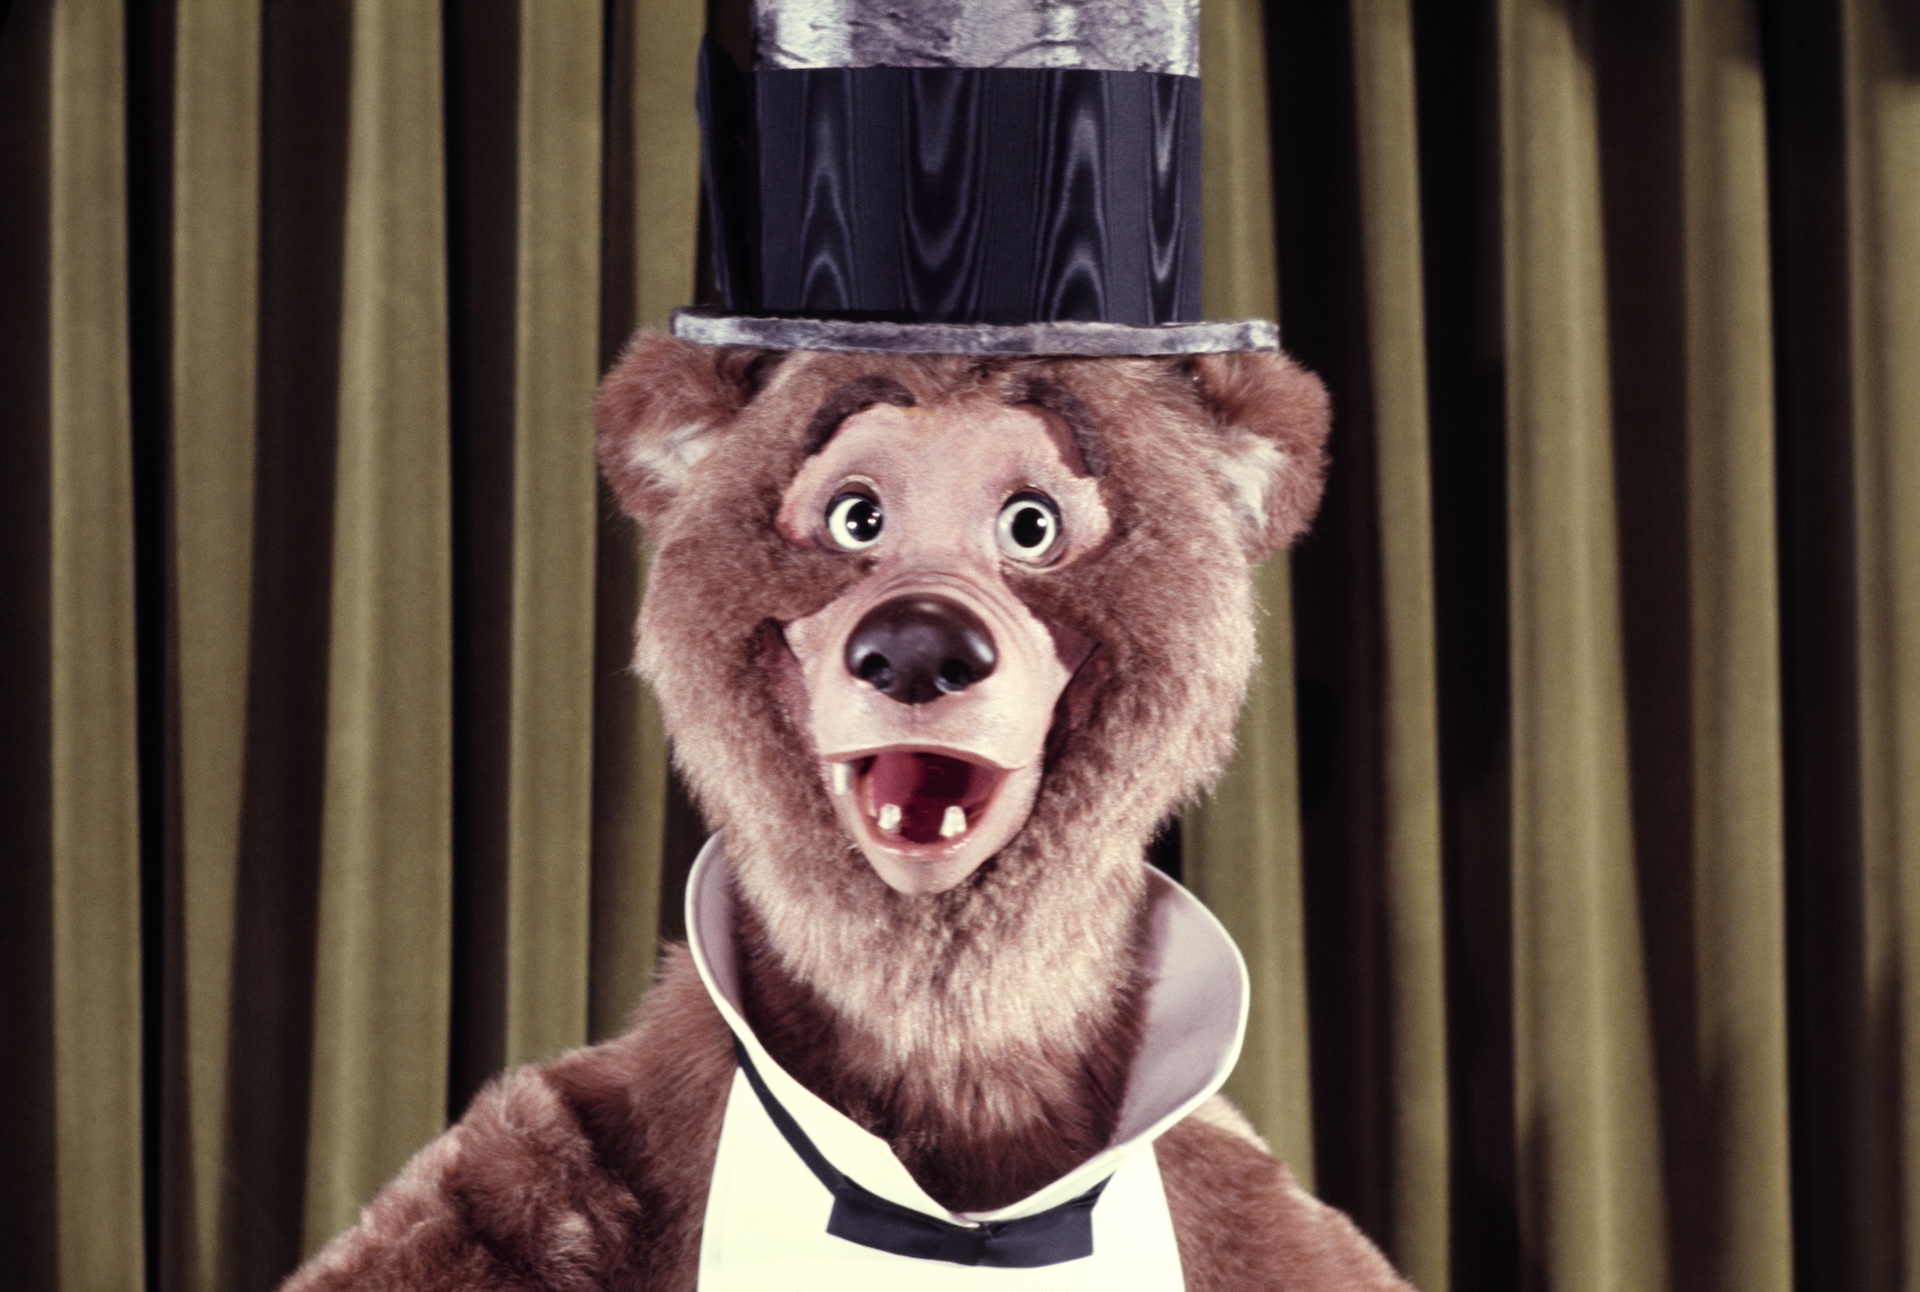 Country Bear Jamboree photo from Walt Disney Archives